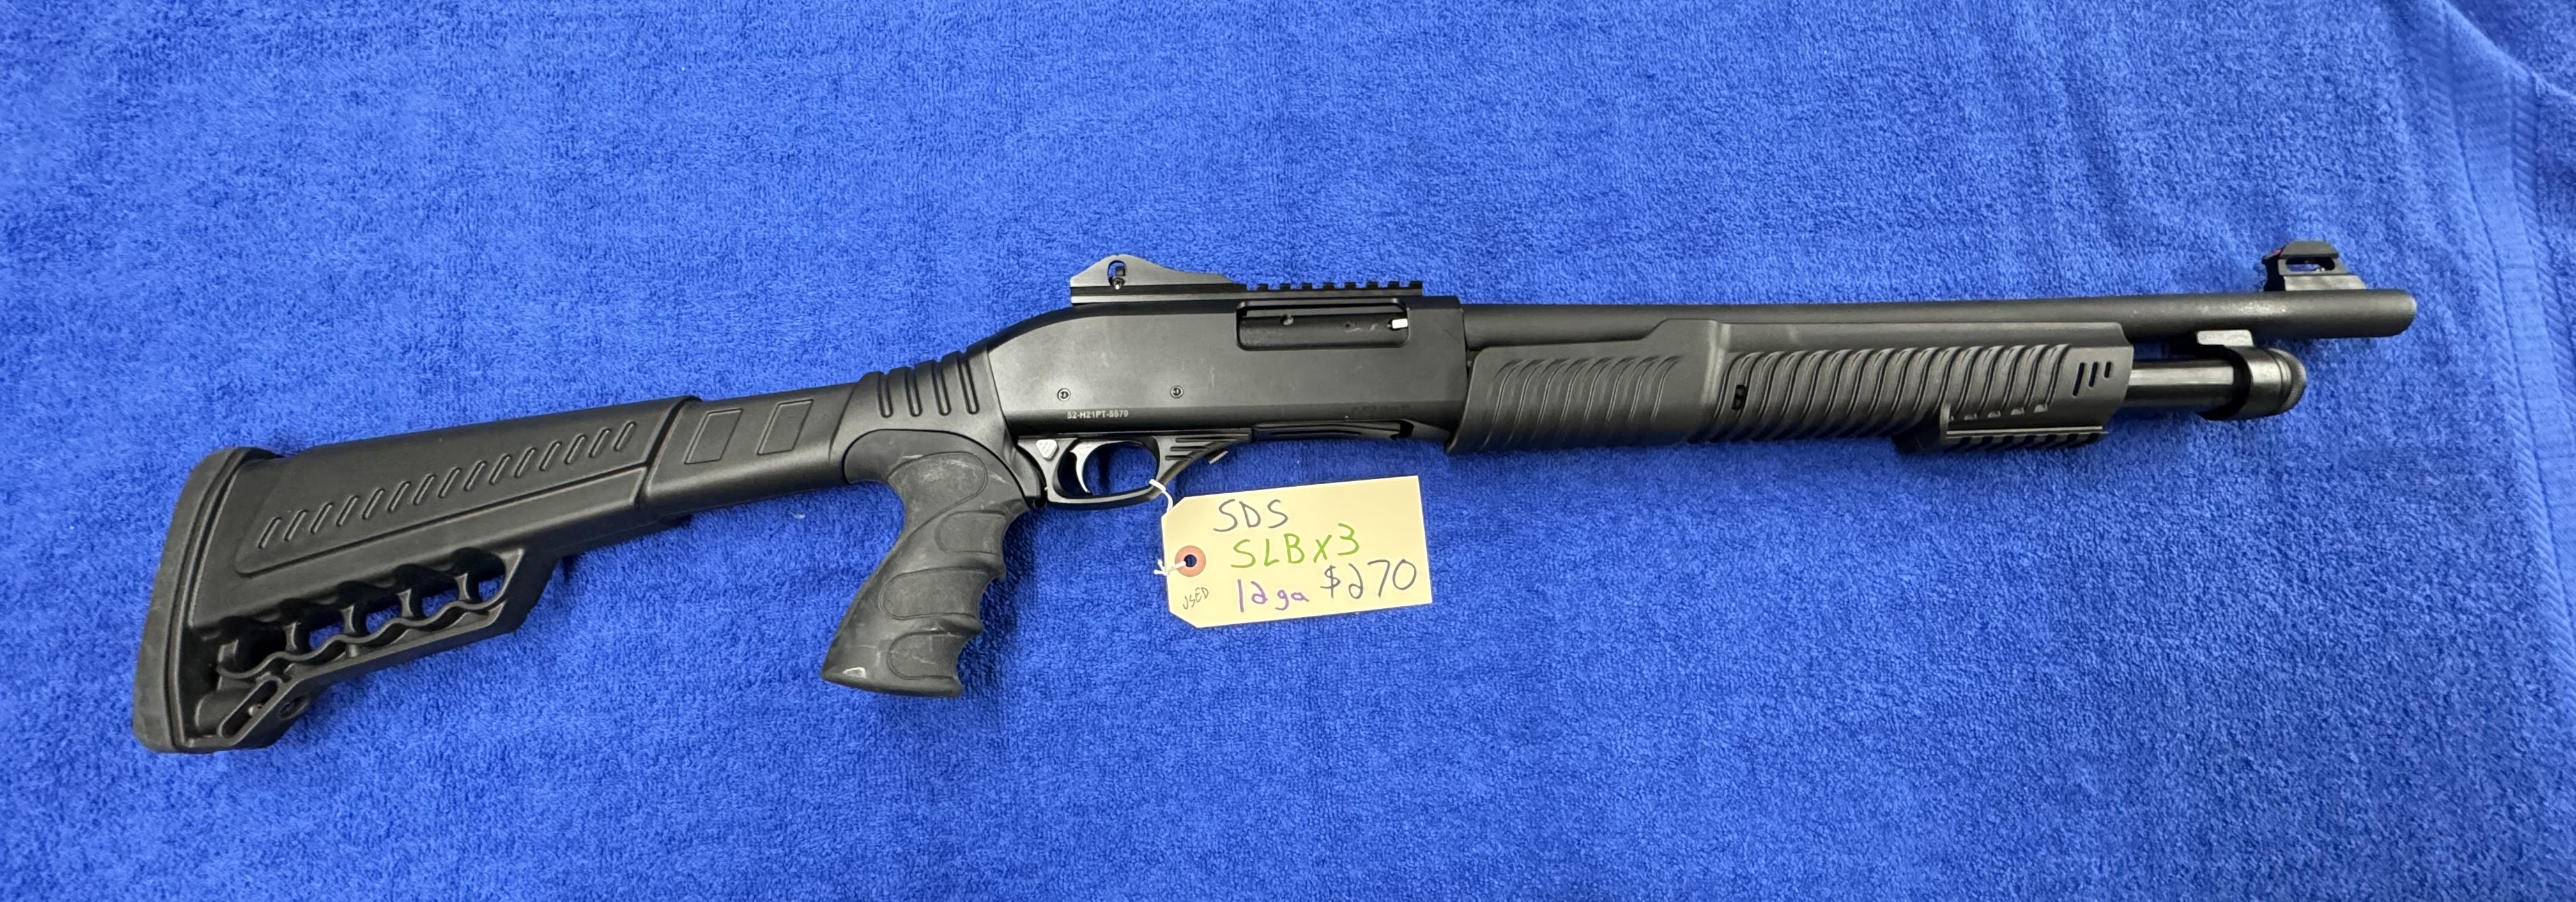 SDS SLBx3 12 ga Tactical shotgun